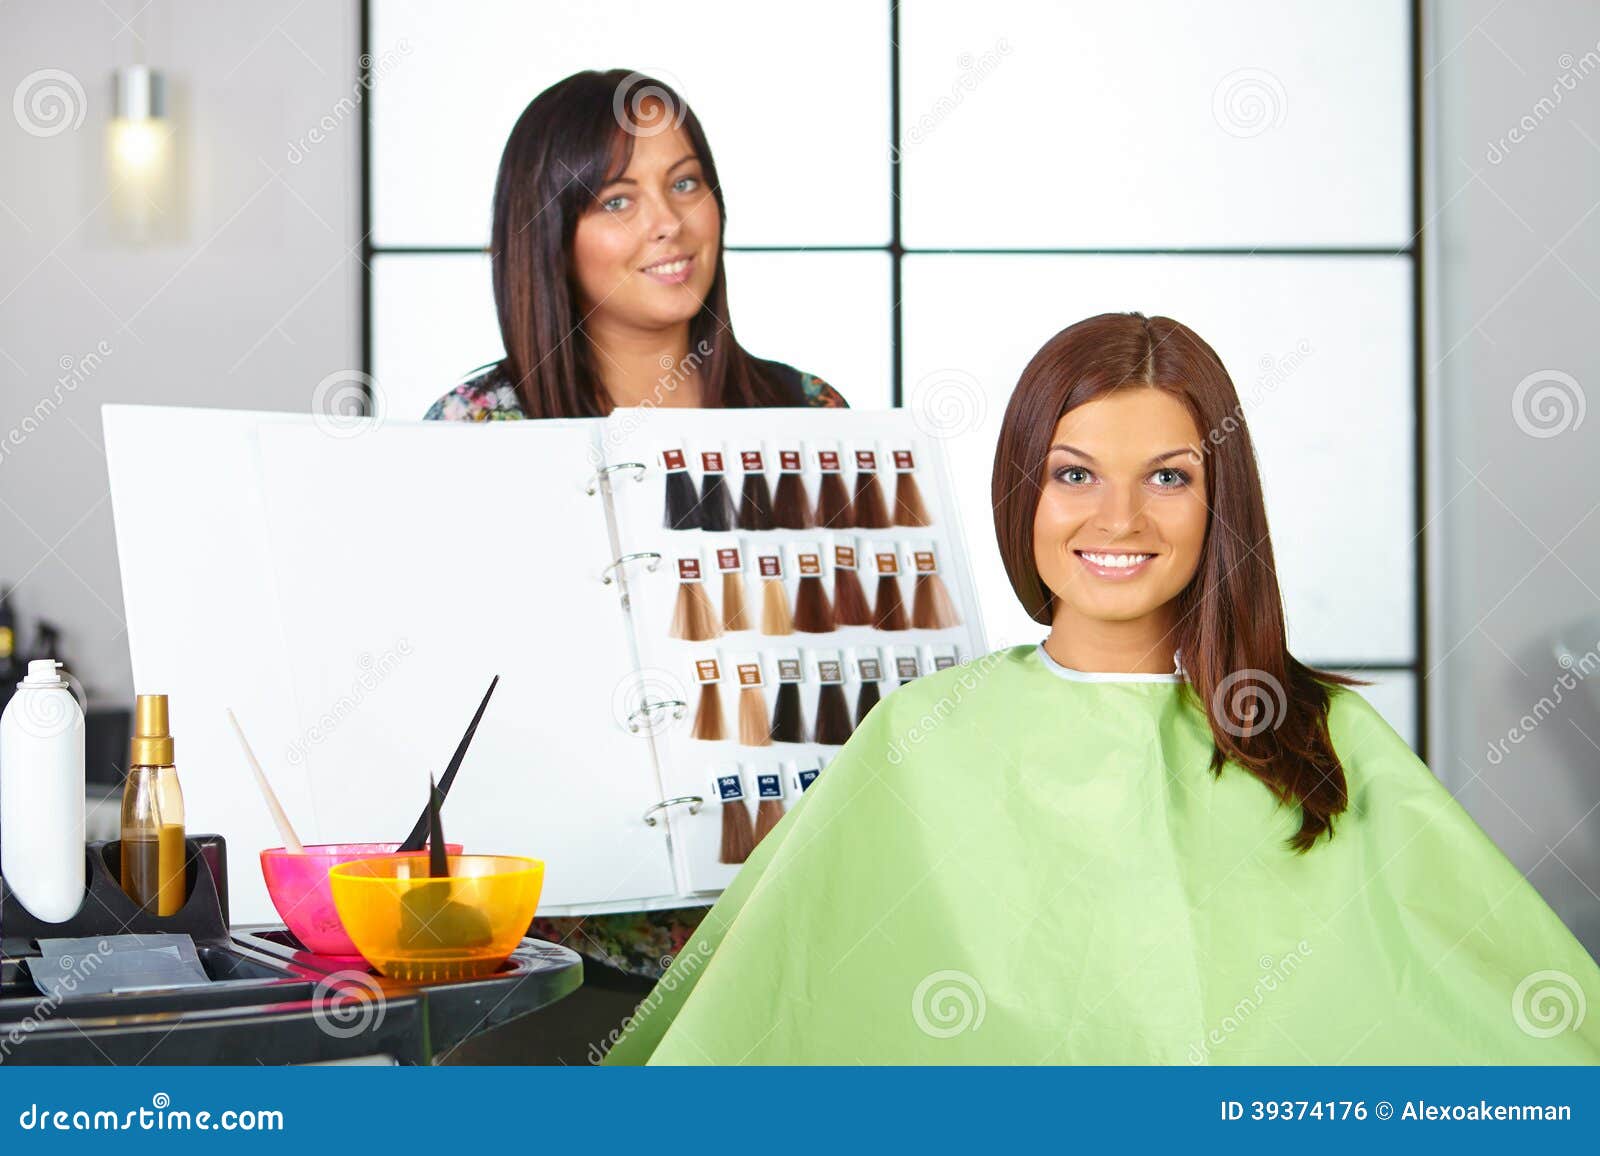 hair salon.